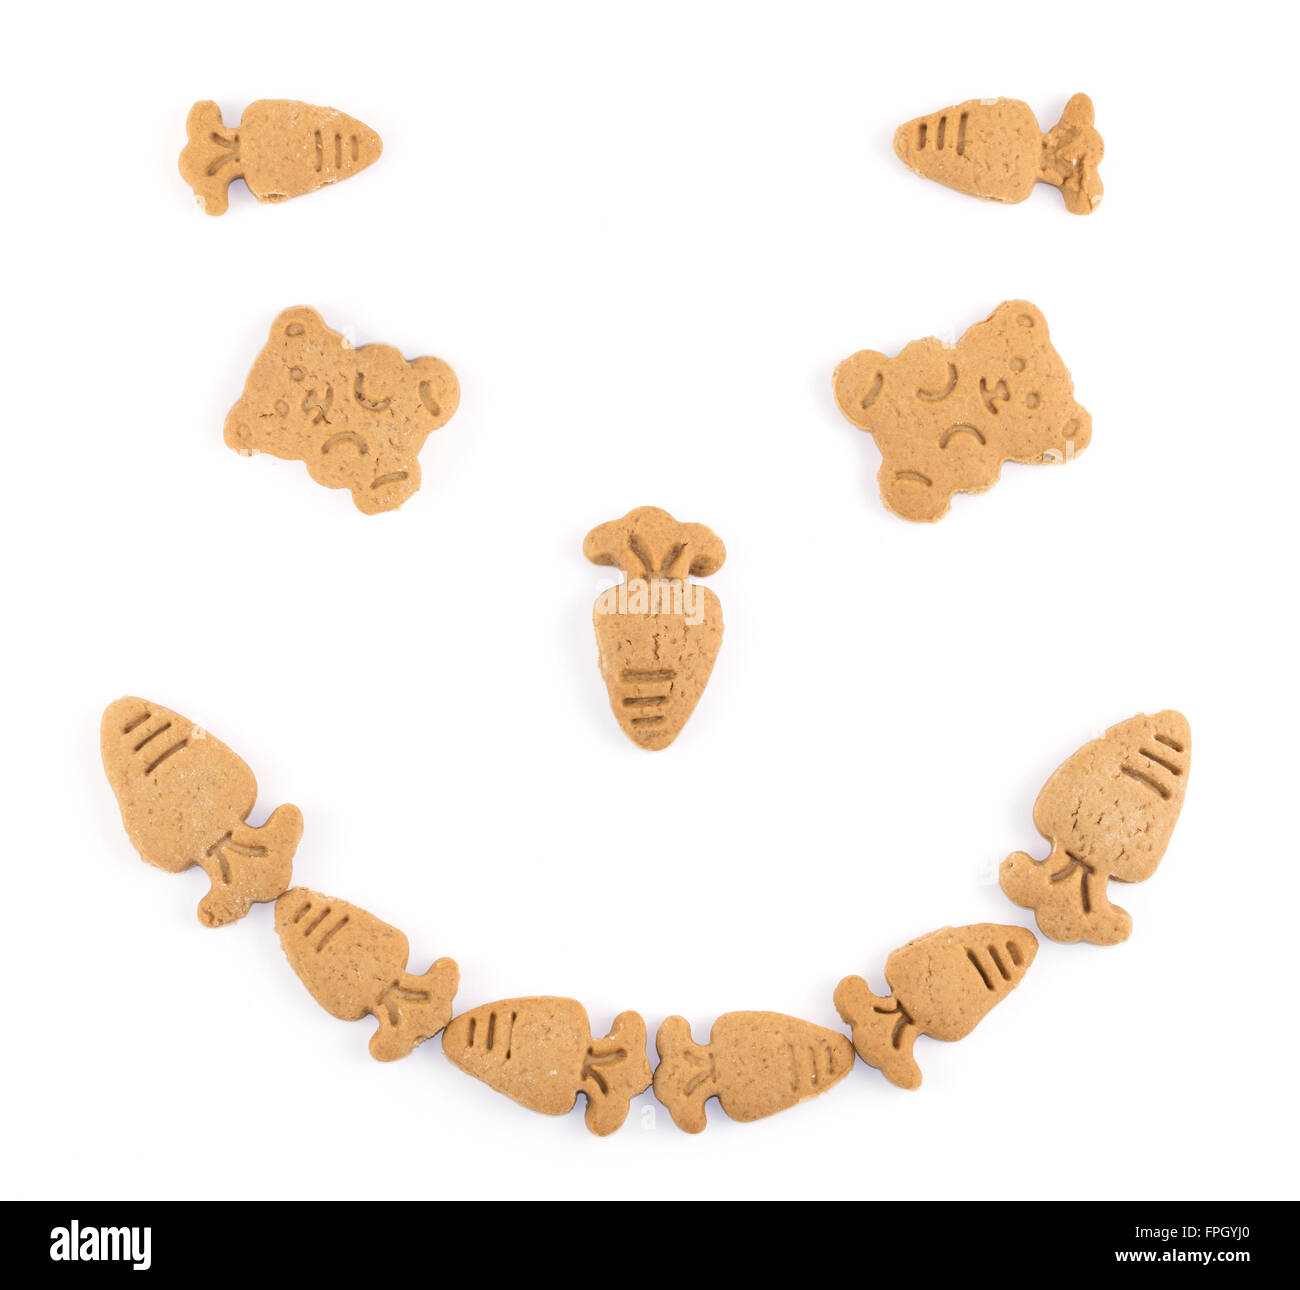 Sonrisa figura hecha de ginger snaps Foto de stock